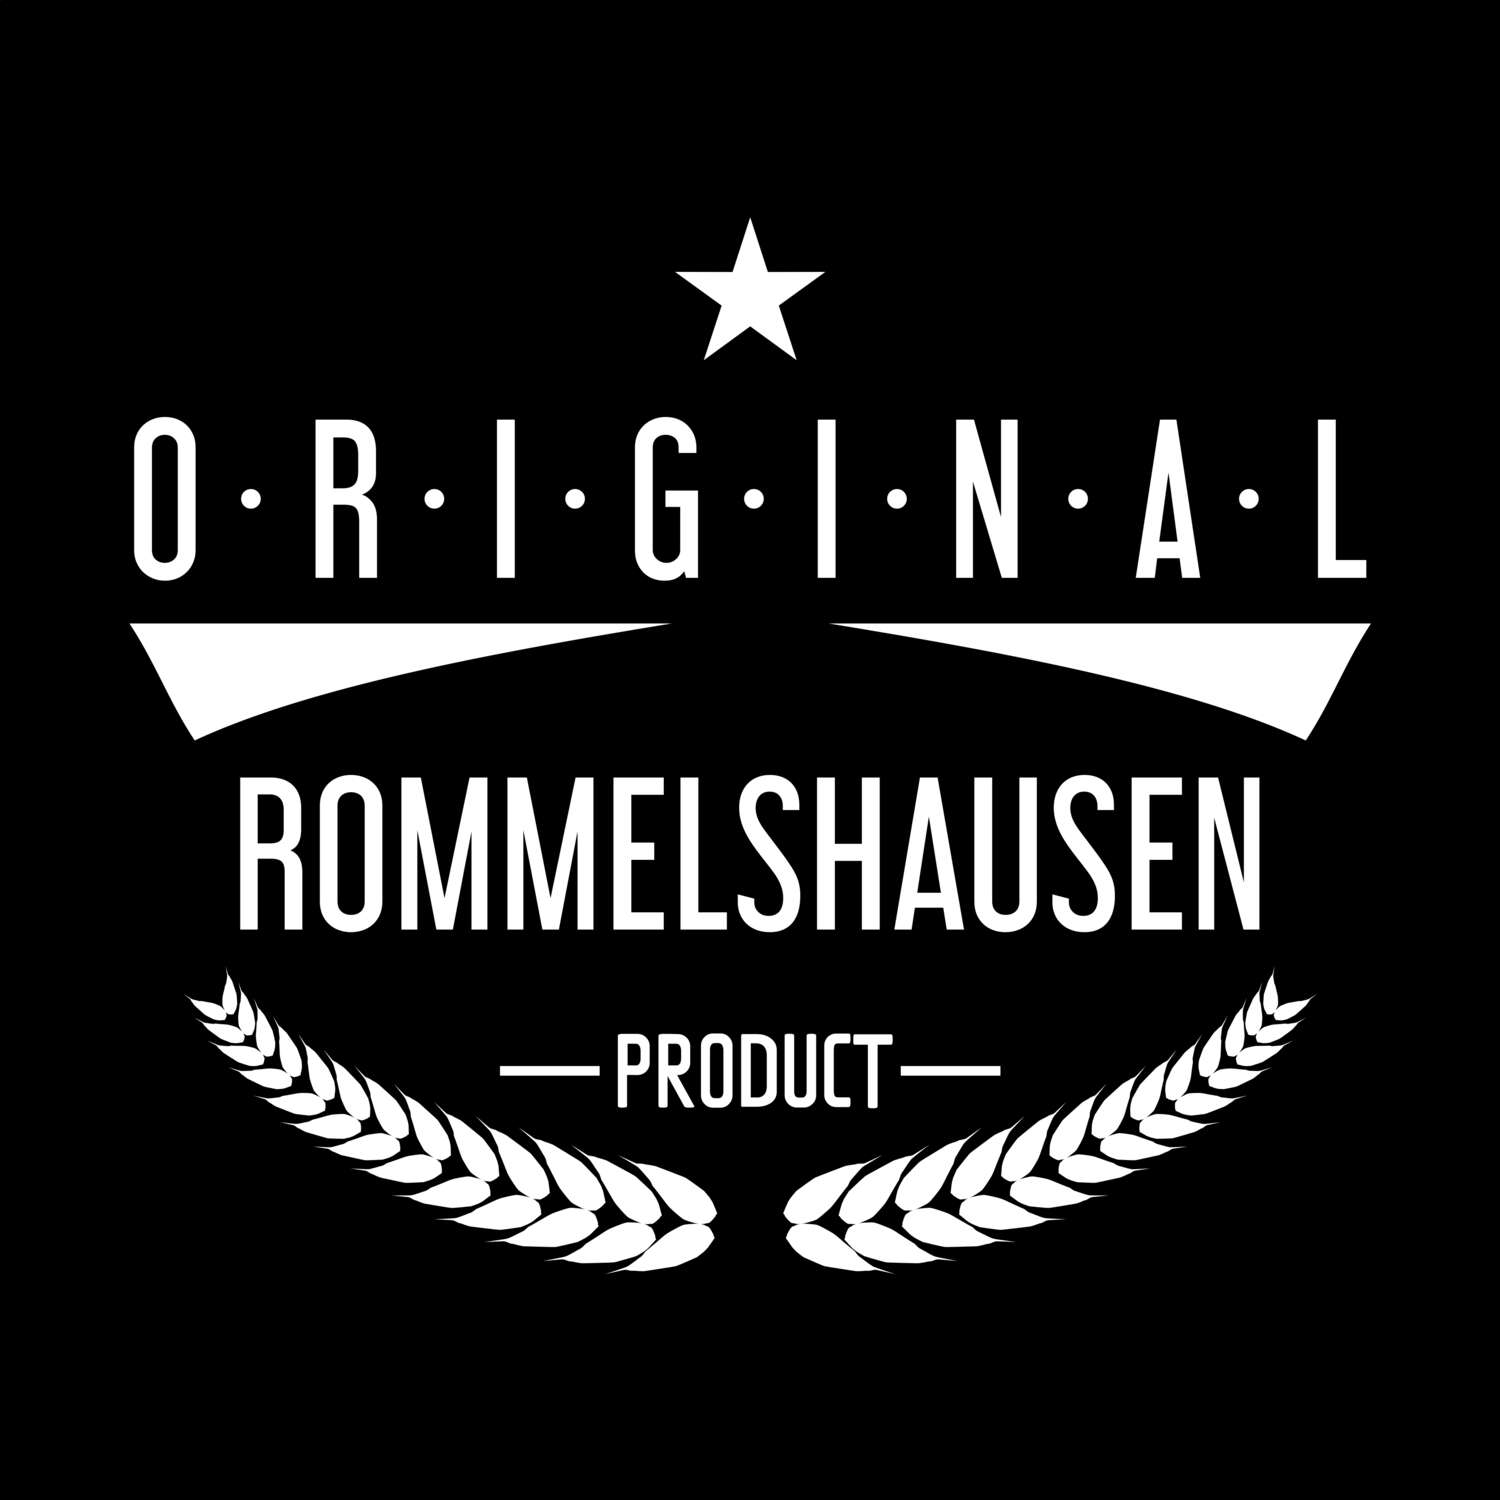 Rommelshausen T-Shirt »Original Product«